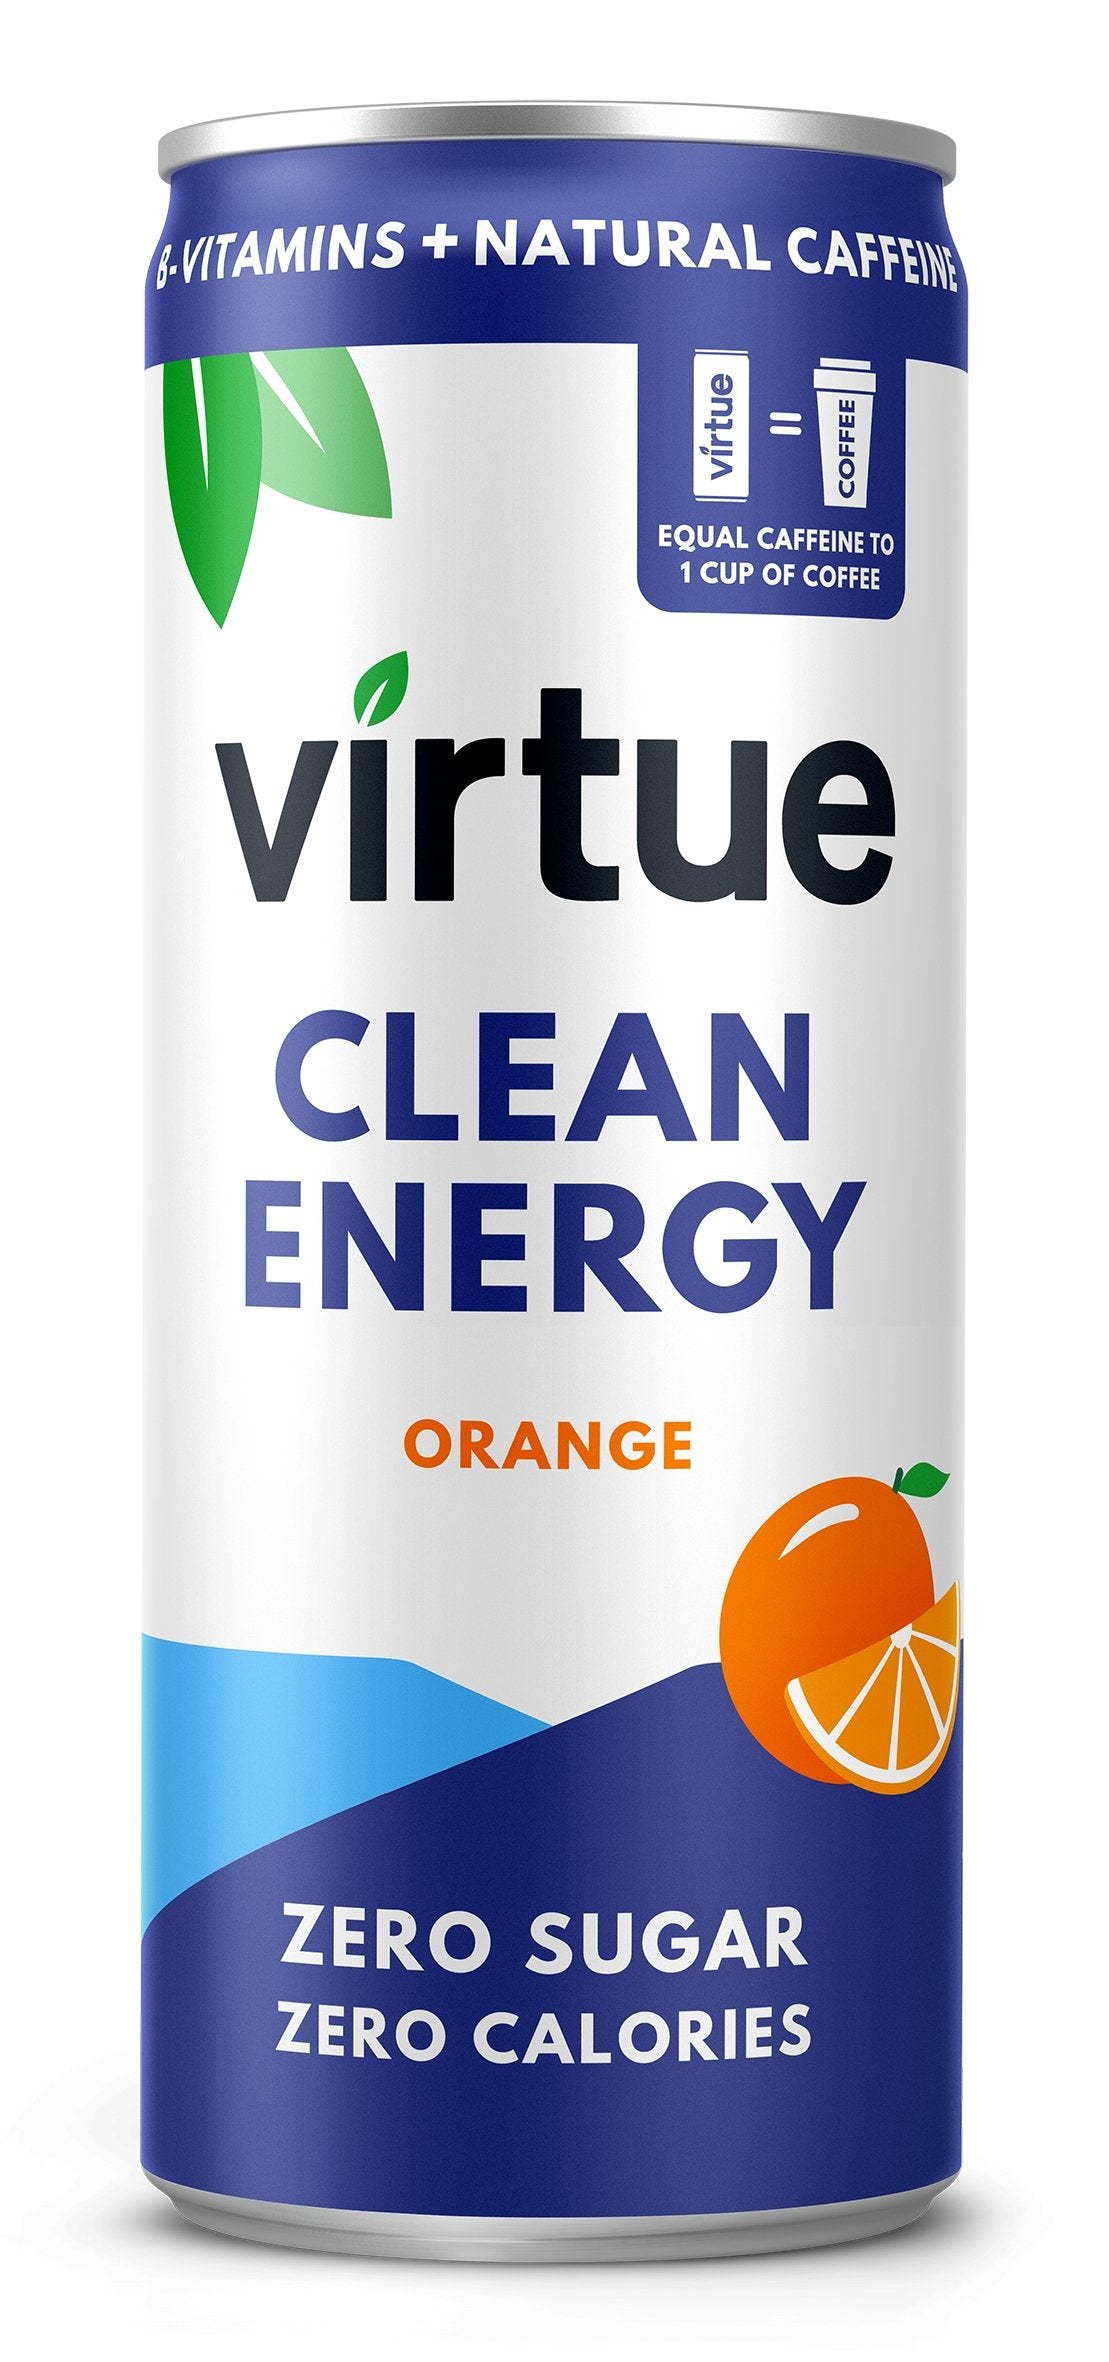 Virtue Clean Energy Drinks 250ml - nulový cukr, nulové kalorie - theskinnyfoodco